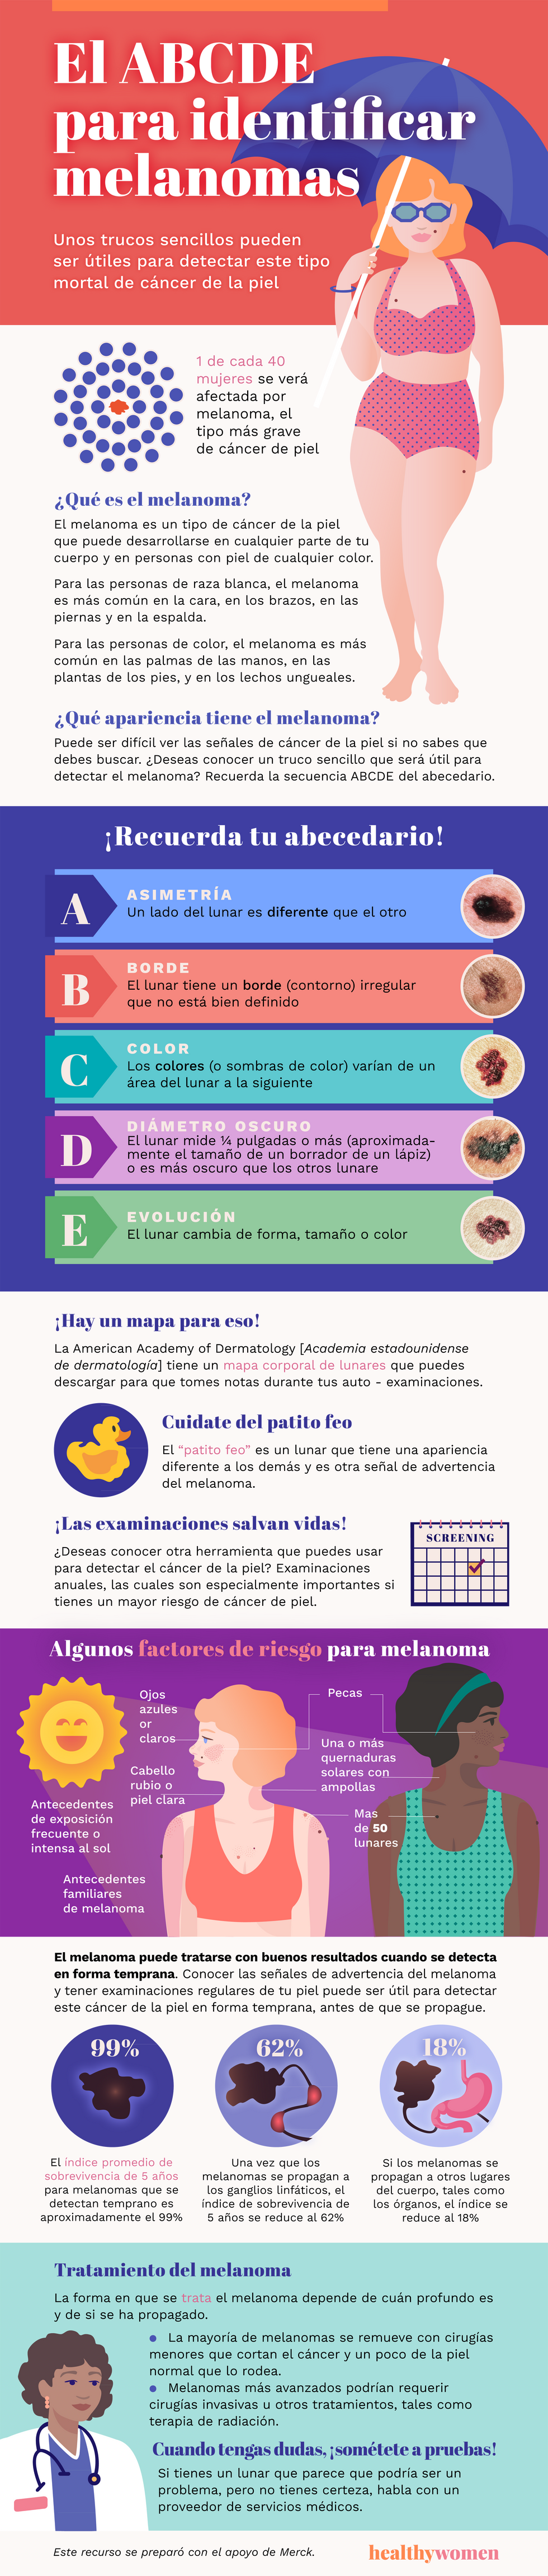 Infographic El ABCDE para identificar melanomas. Click the image to open the PDF